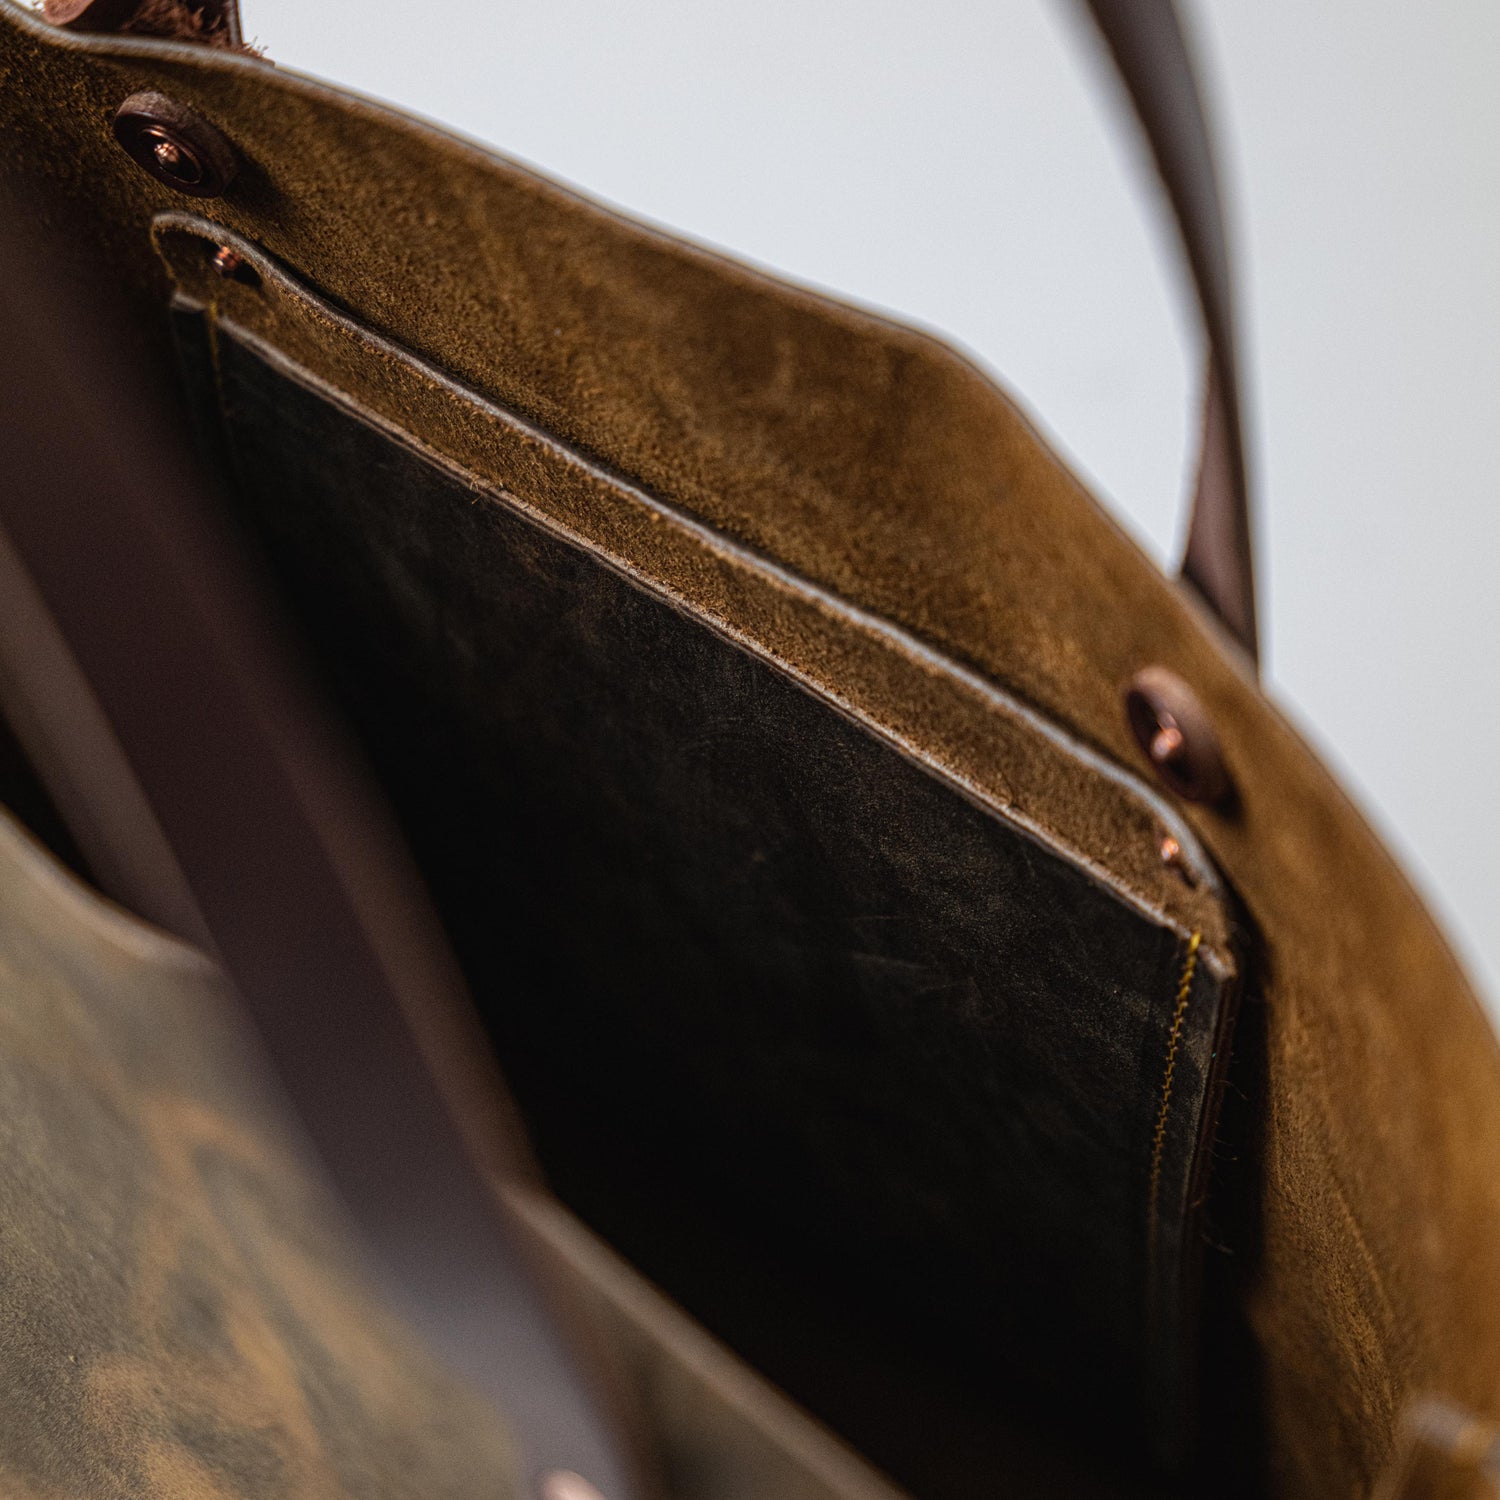 Grey Soft Leather Bucket Handbag Basket Bag with Inner Pouch